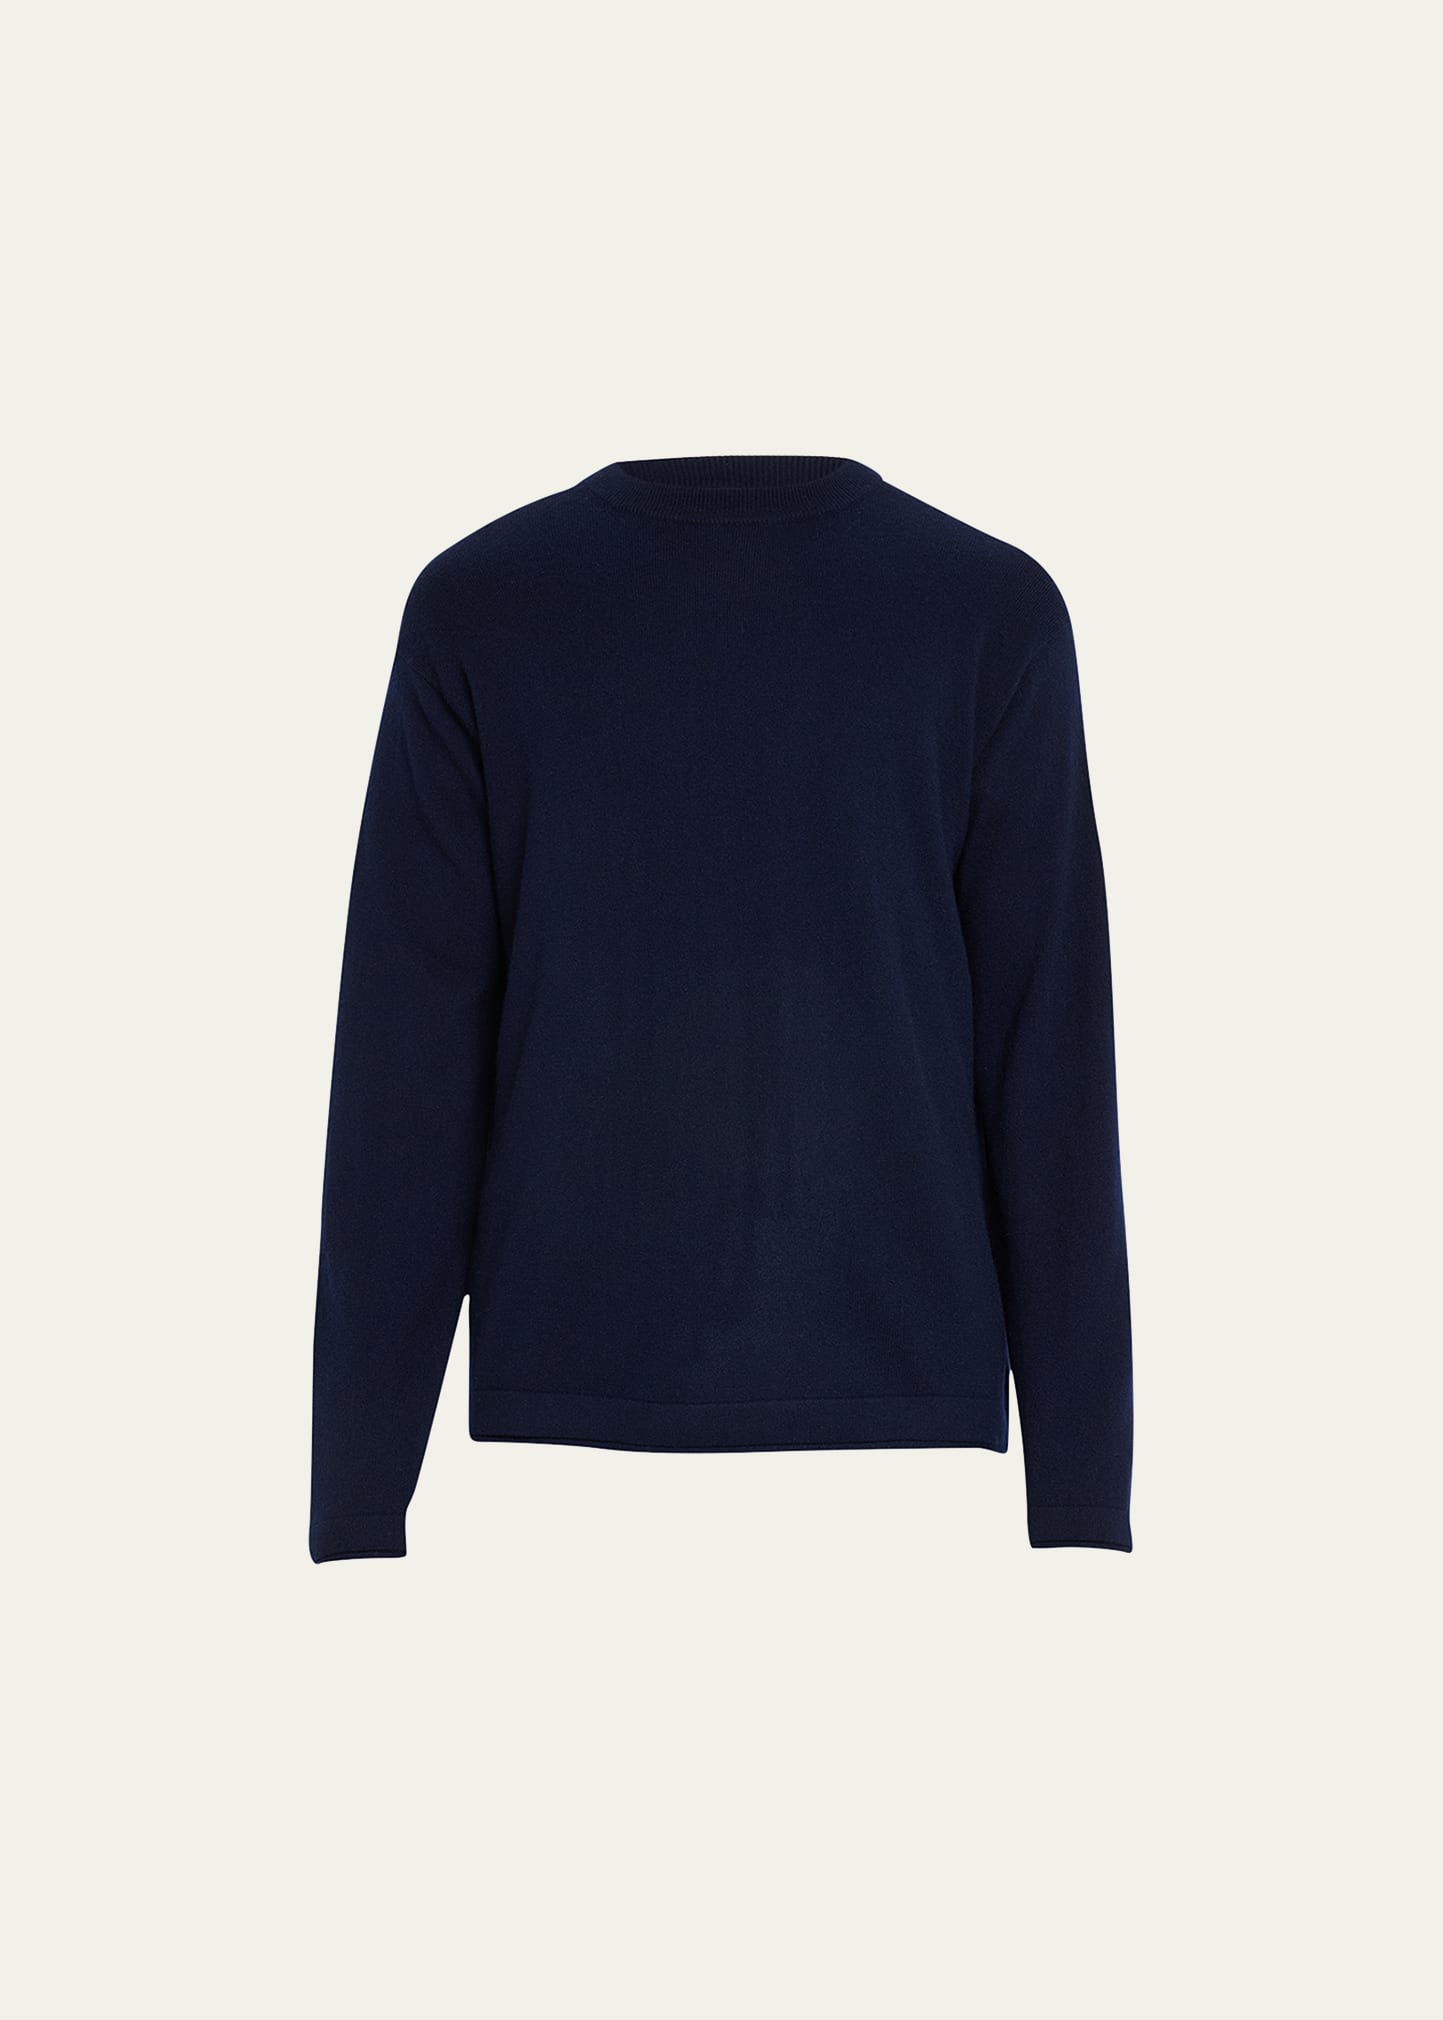 Men's Beneoit 12-Gauge Cashmere Sweater